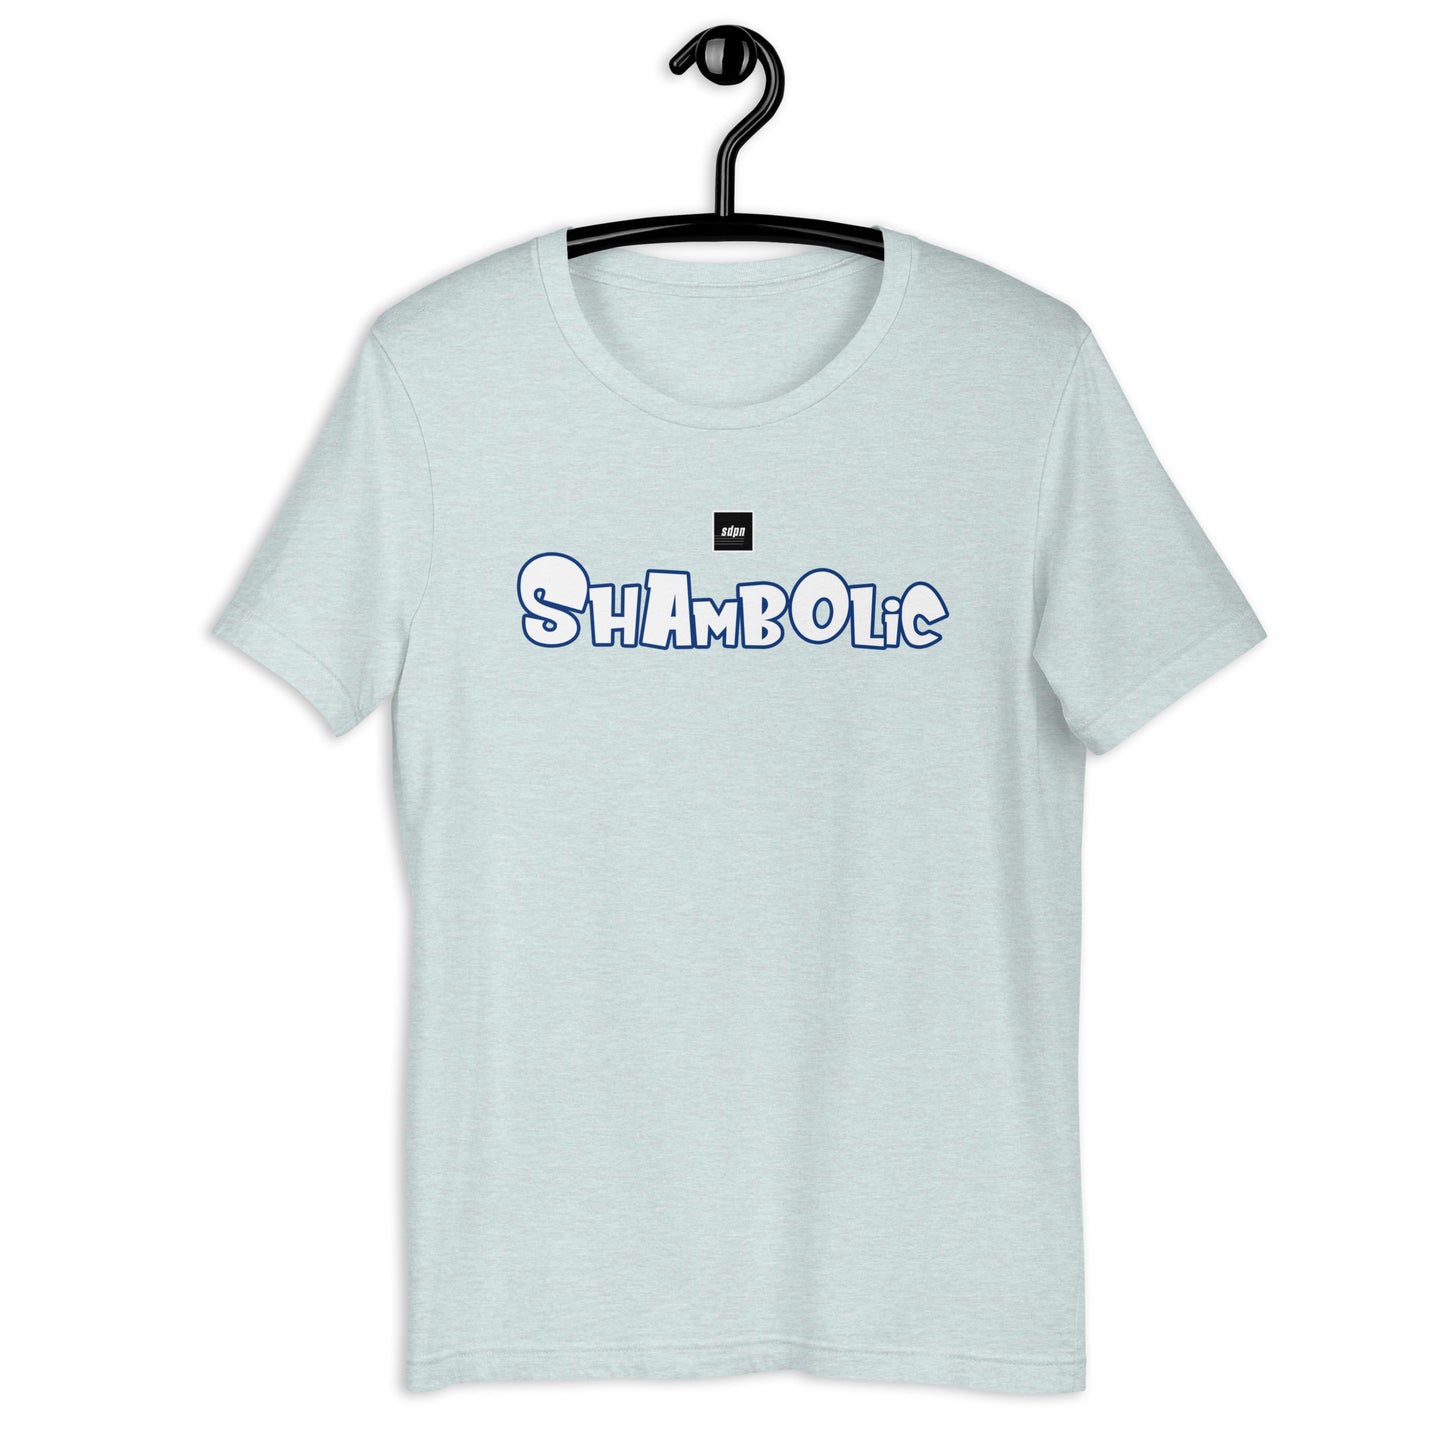 Steve Dangle "Shambolic" T-Shirt